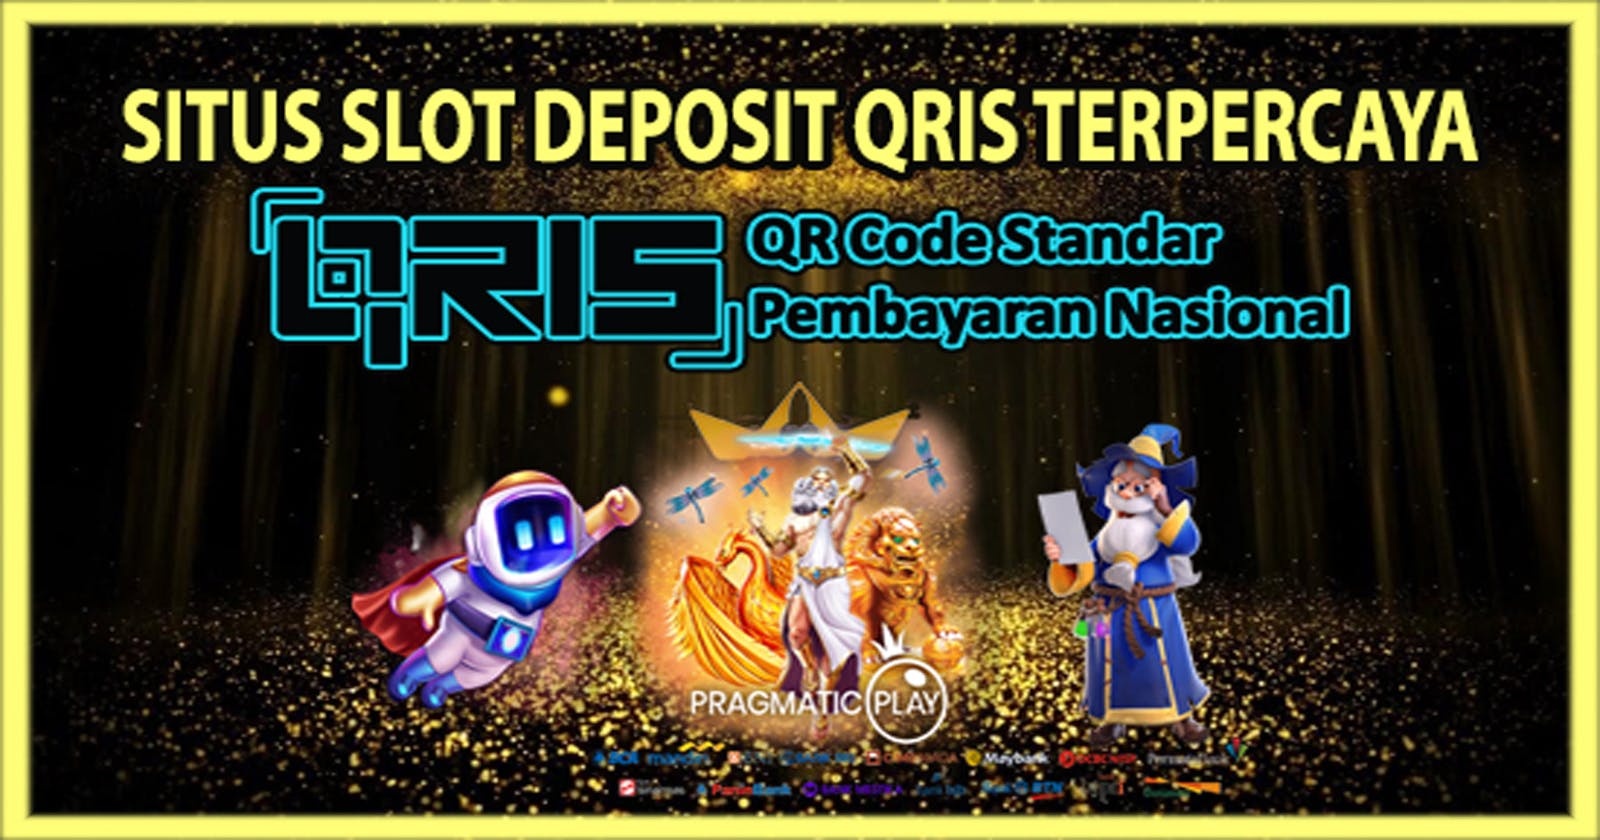 Situs Slot Deposit Qris Terpercaya